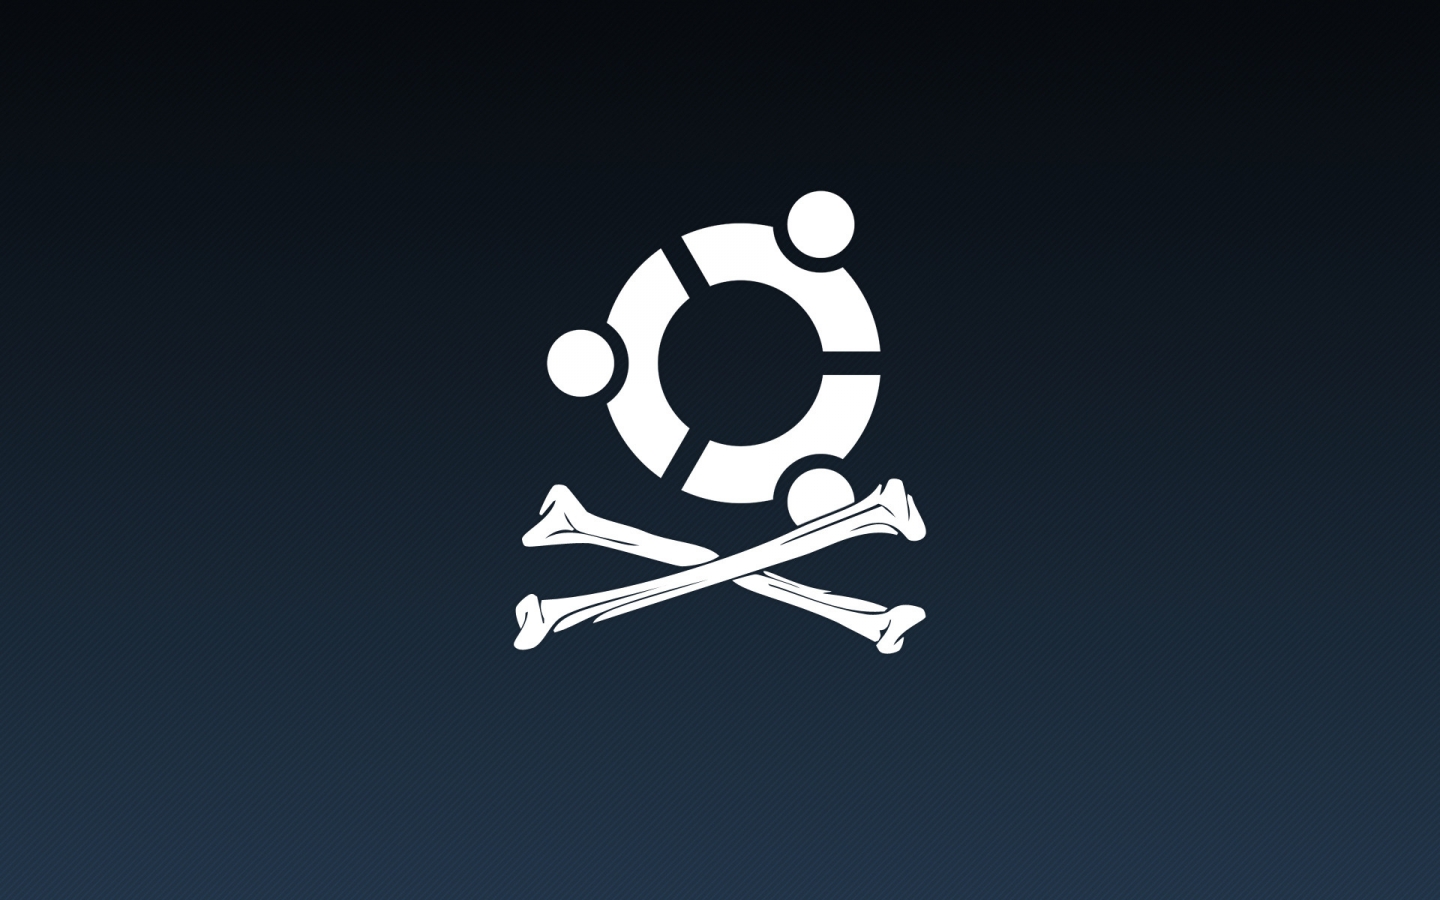 Pirate Ubuntu for 1440 x 900 widescreen resolution